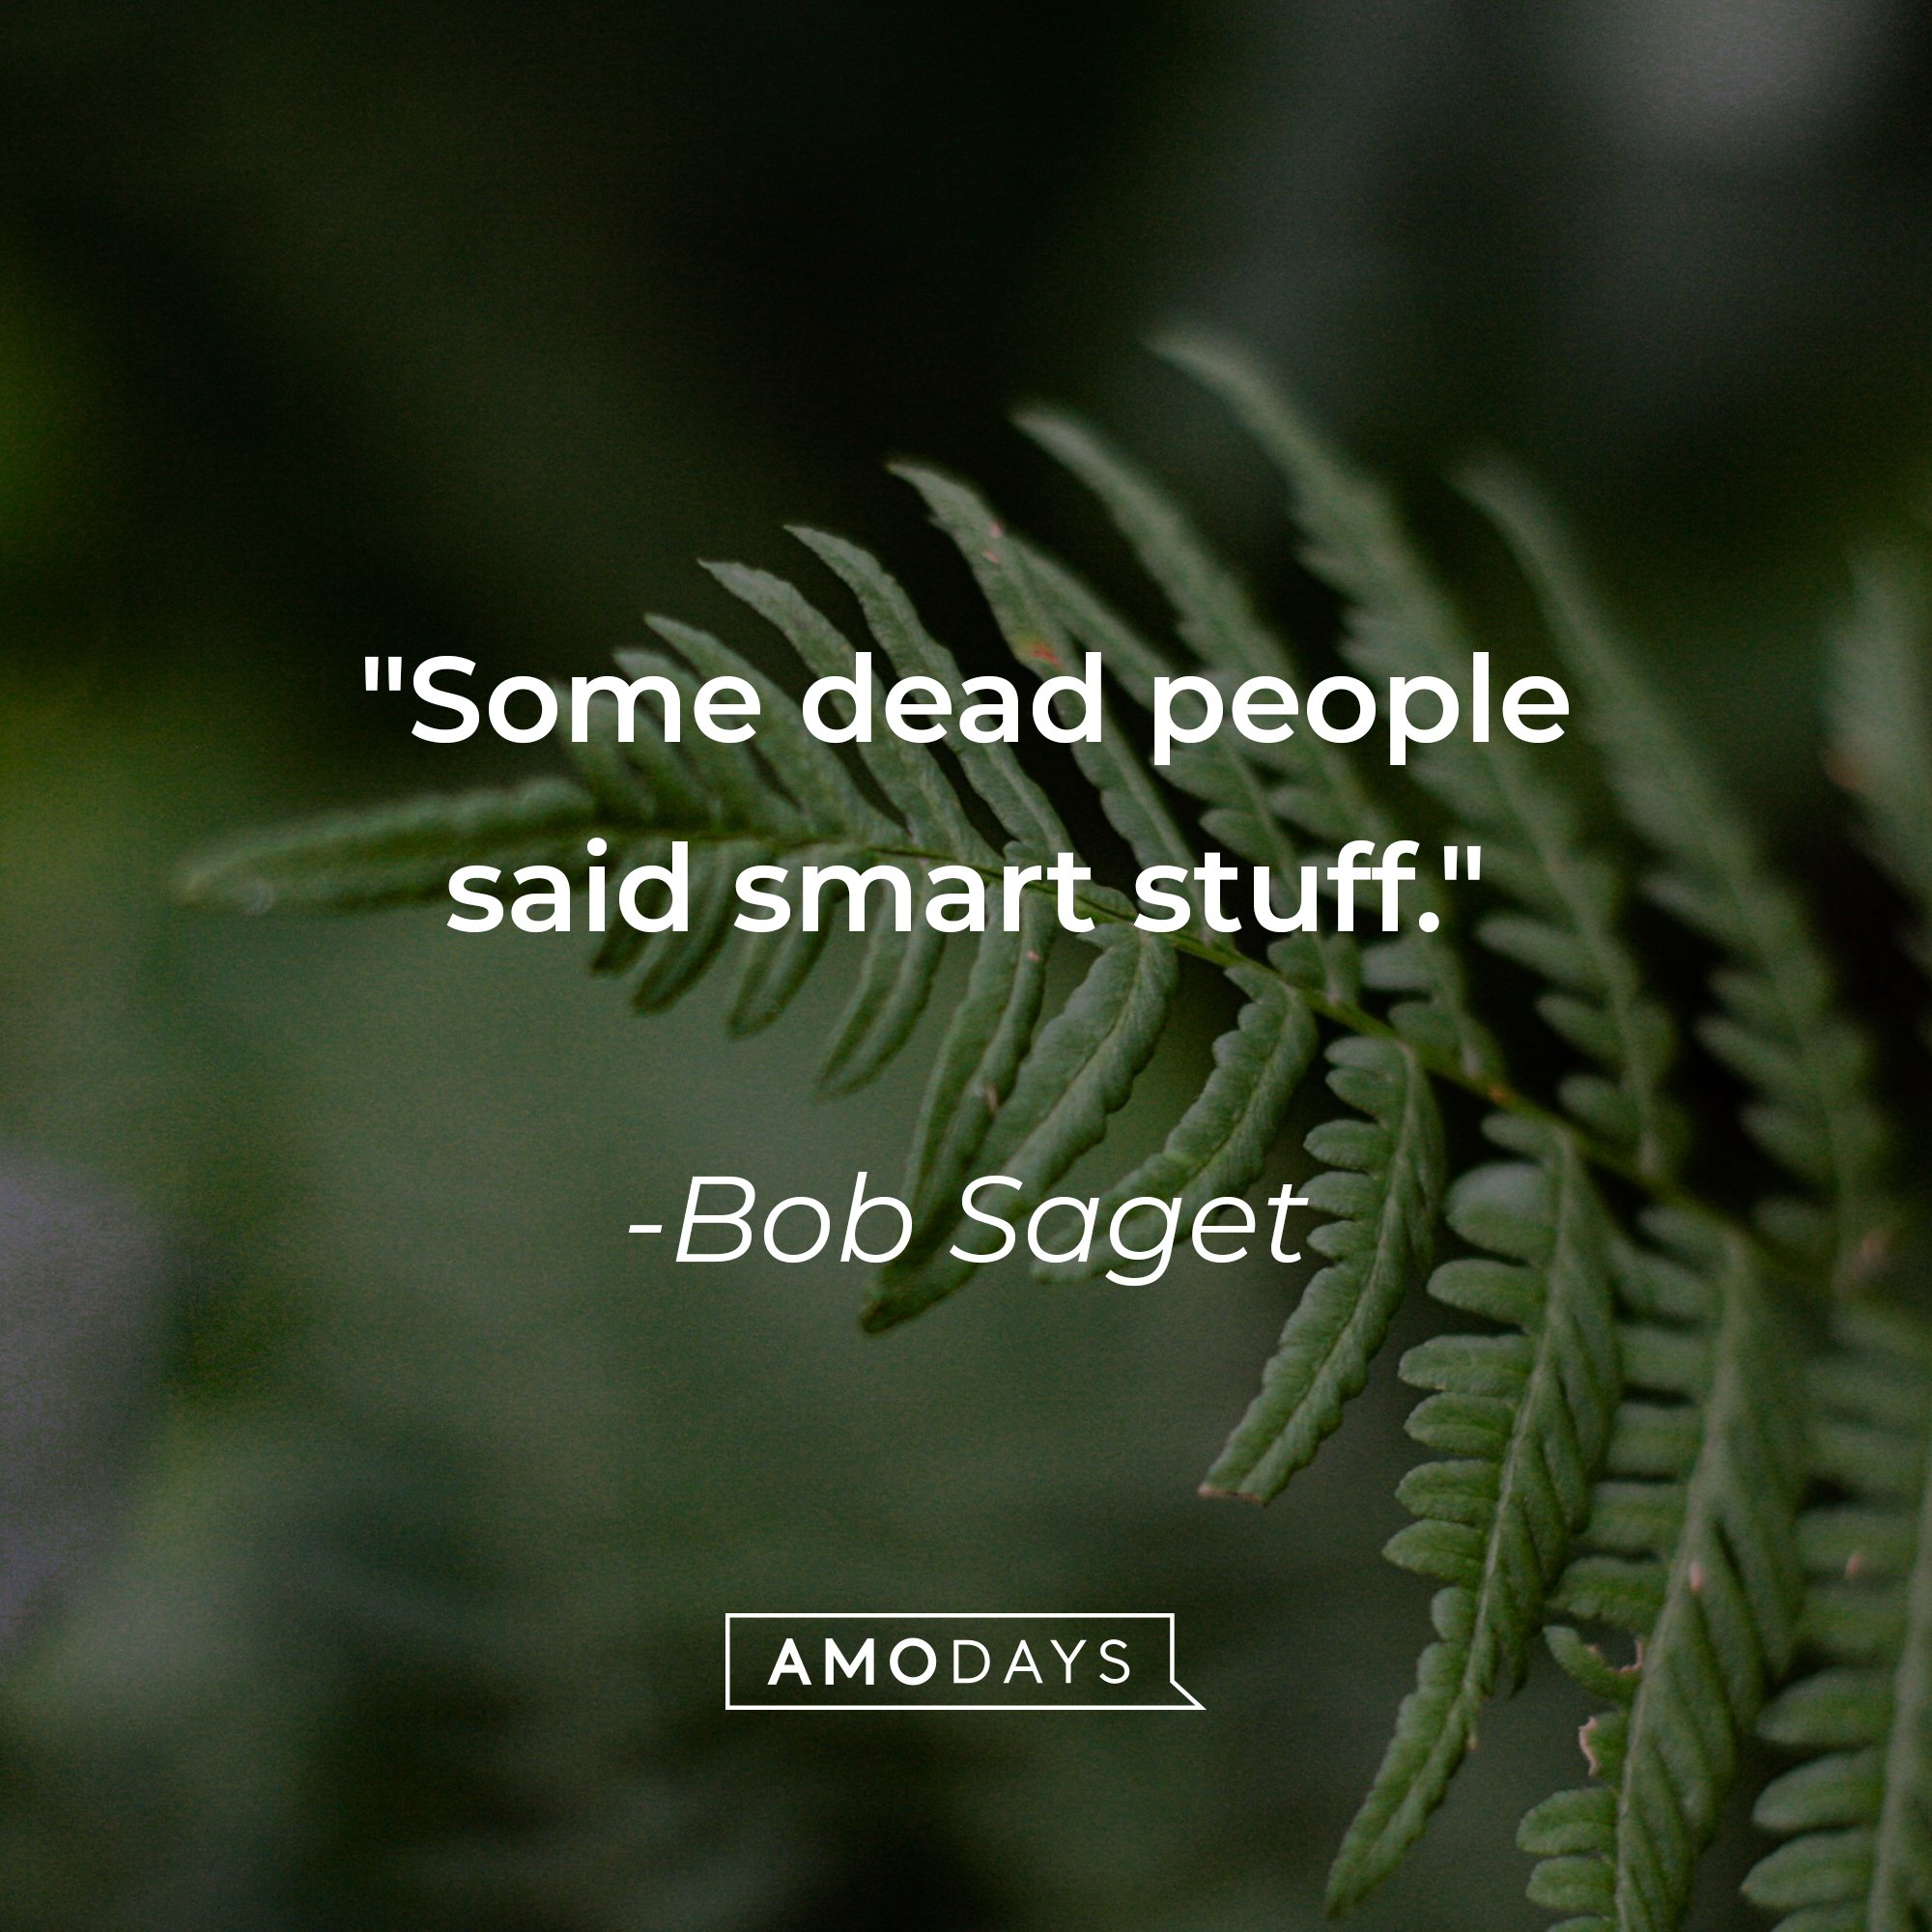  Bob Saget’s quote: "Some dead people said smart stuff." | Image: AmoDays